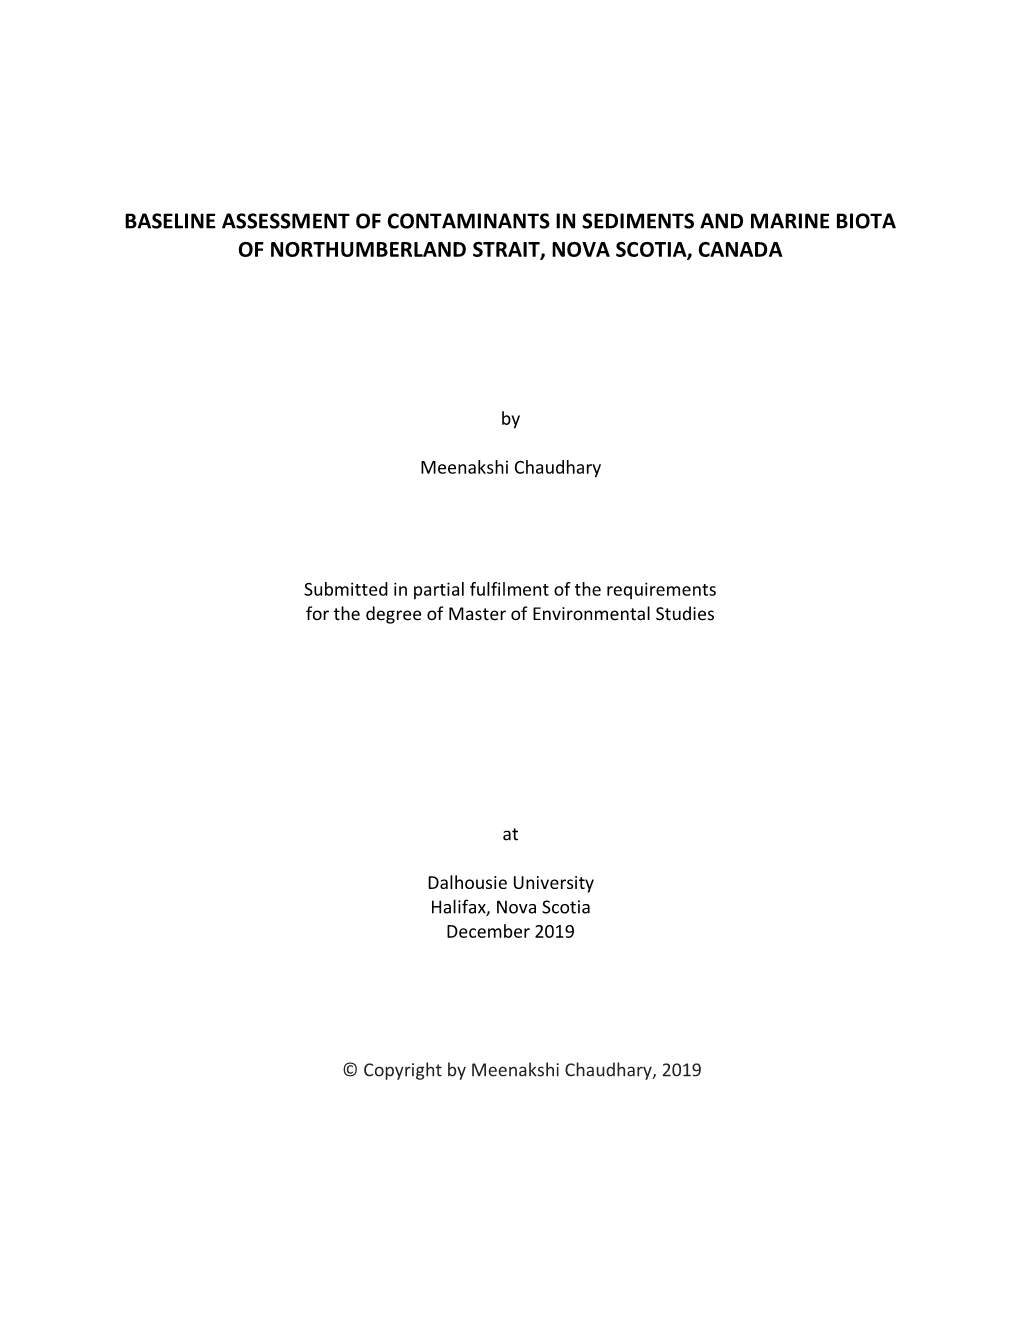 Baseline Assessment of Contaminants in Sediments and Marine Biota of Northumberland Strait, Nova Scotia, Canada